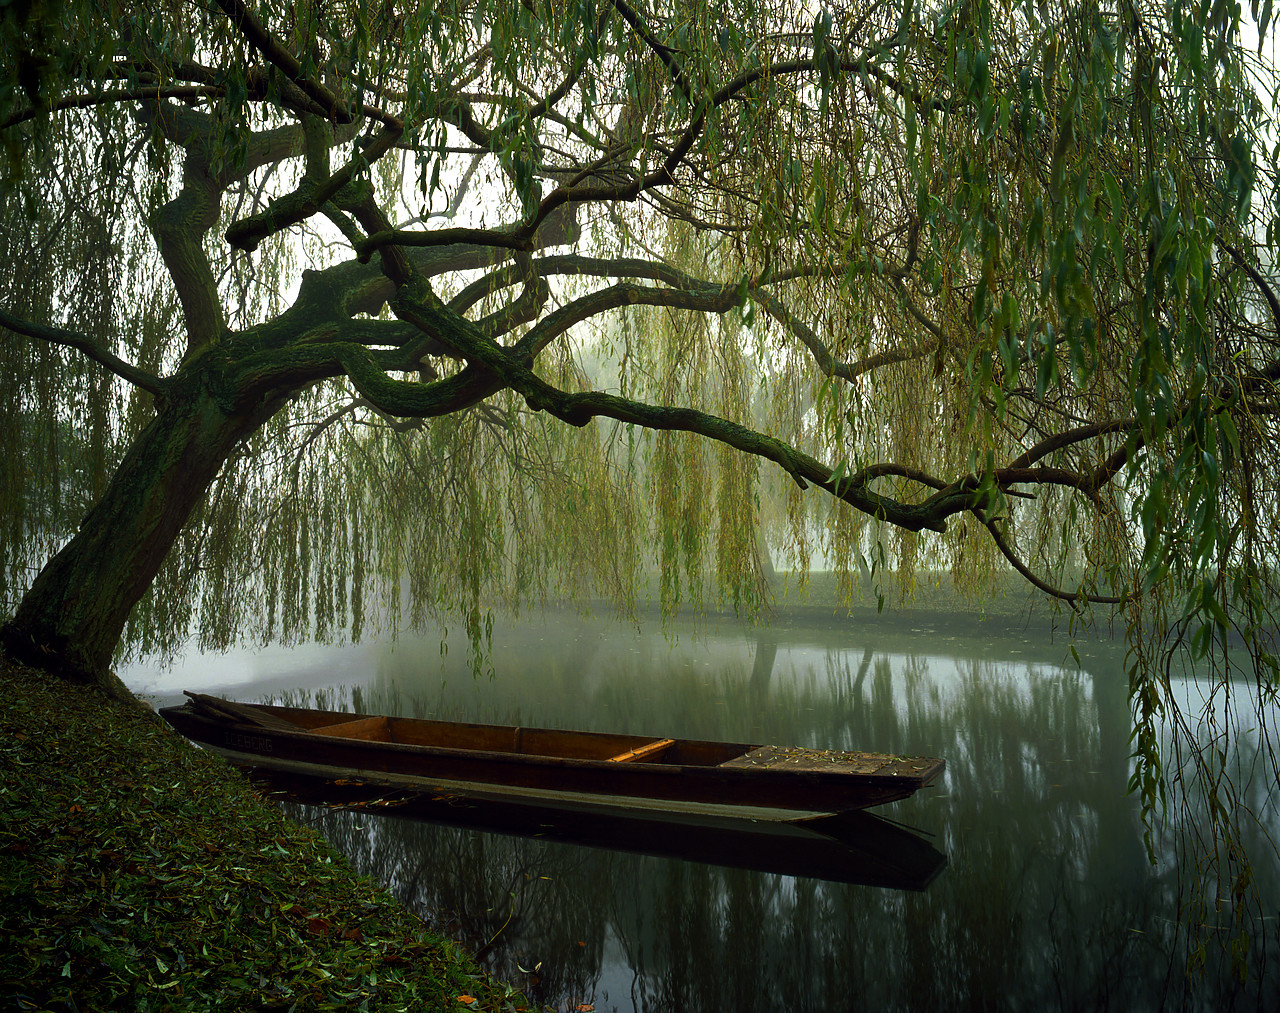 #881791-1 - Punt under Willow in Fog, Cambridge, England